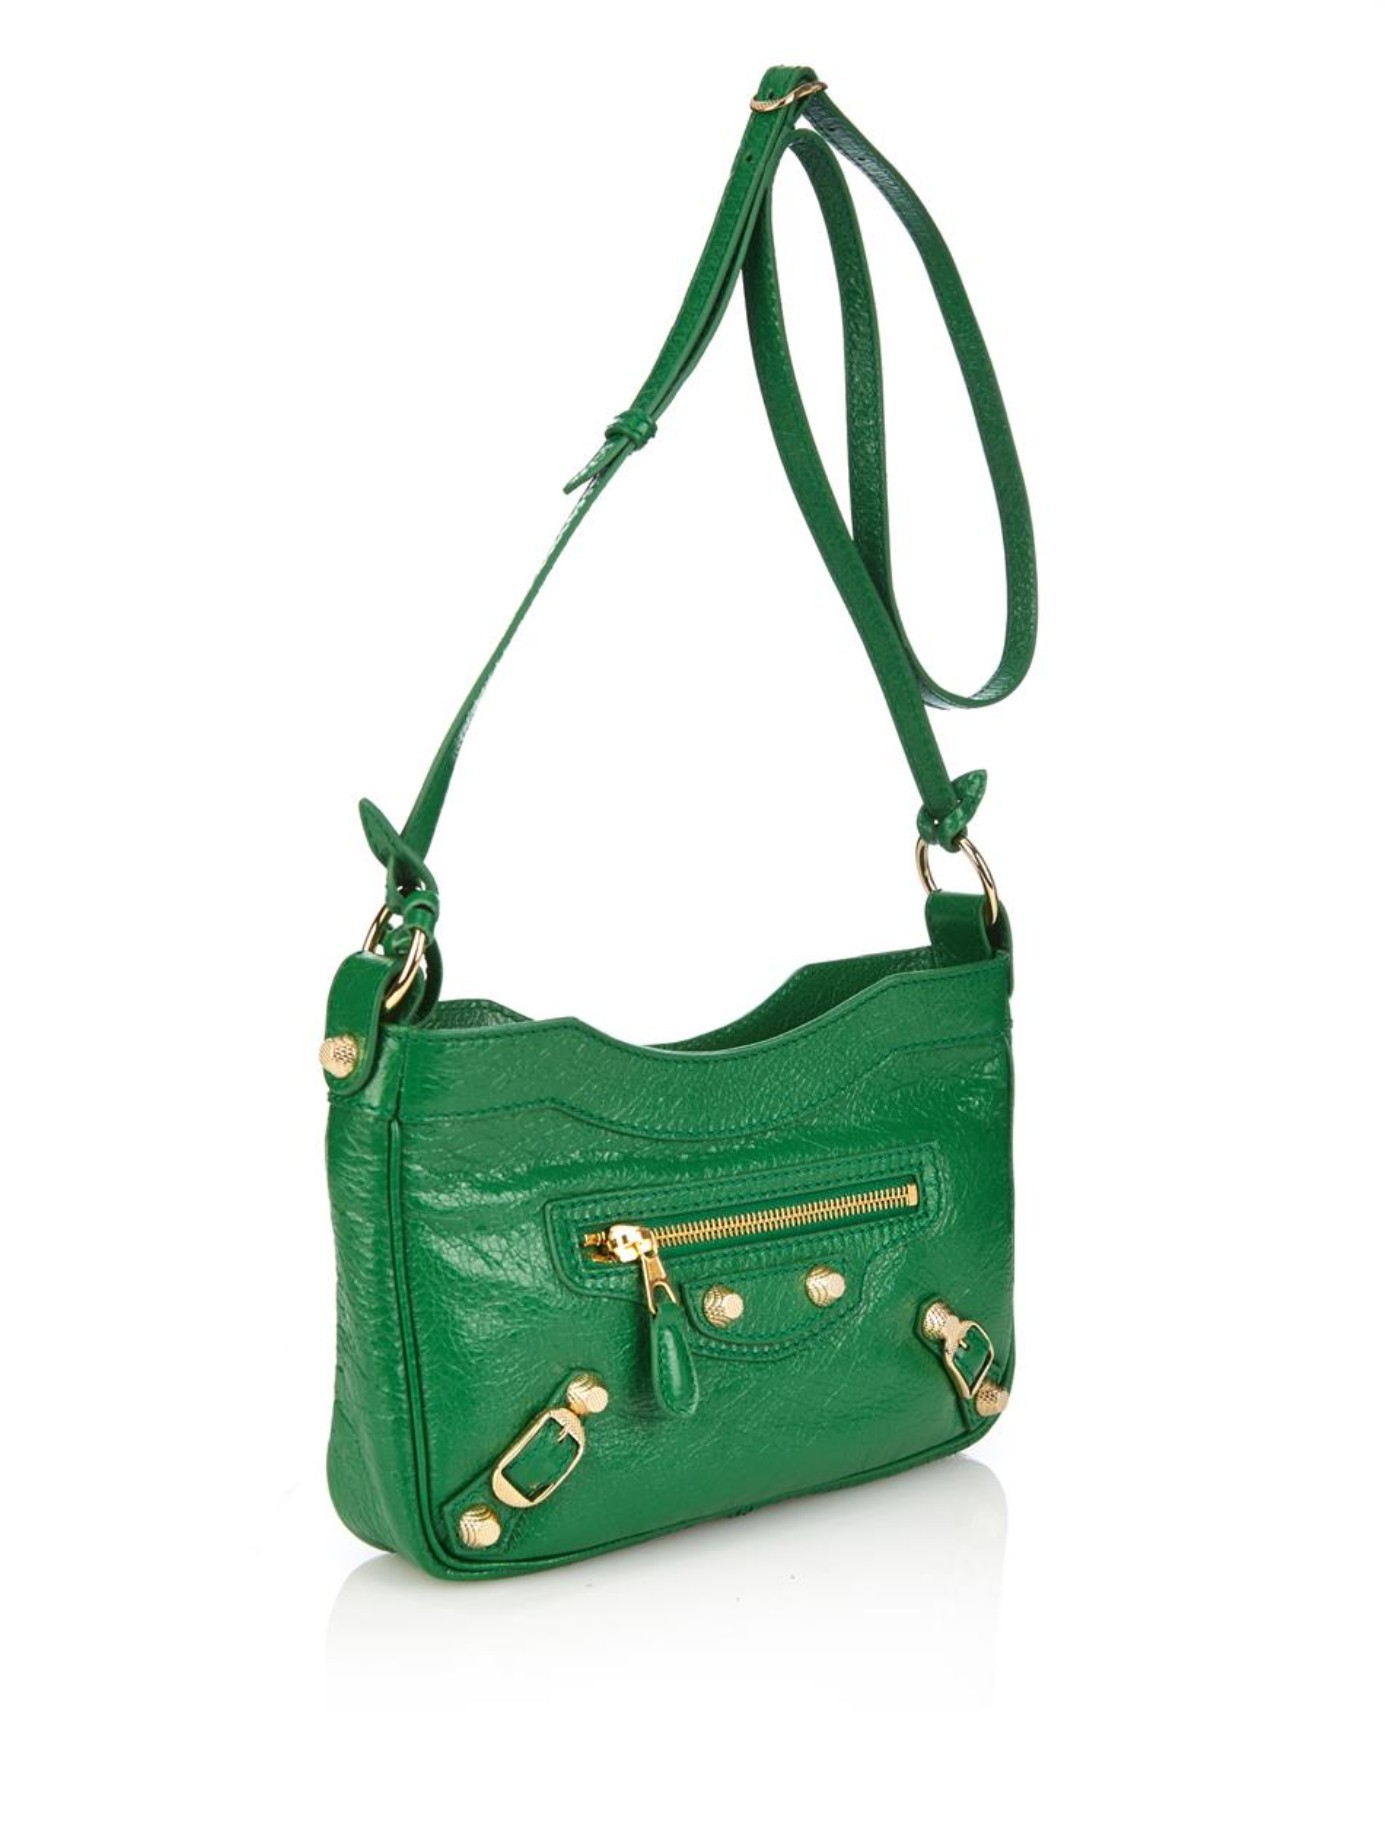 Balenciaga Giant 12 Hip Cross-Body Bag in Green - Lyst